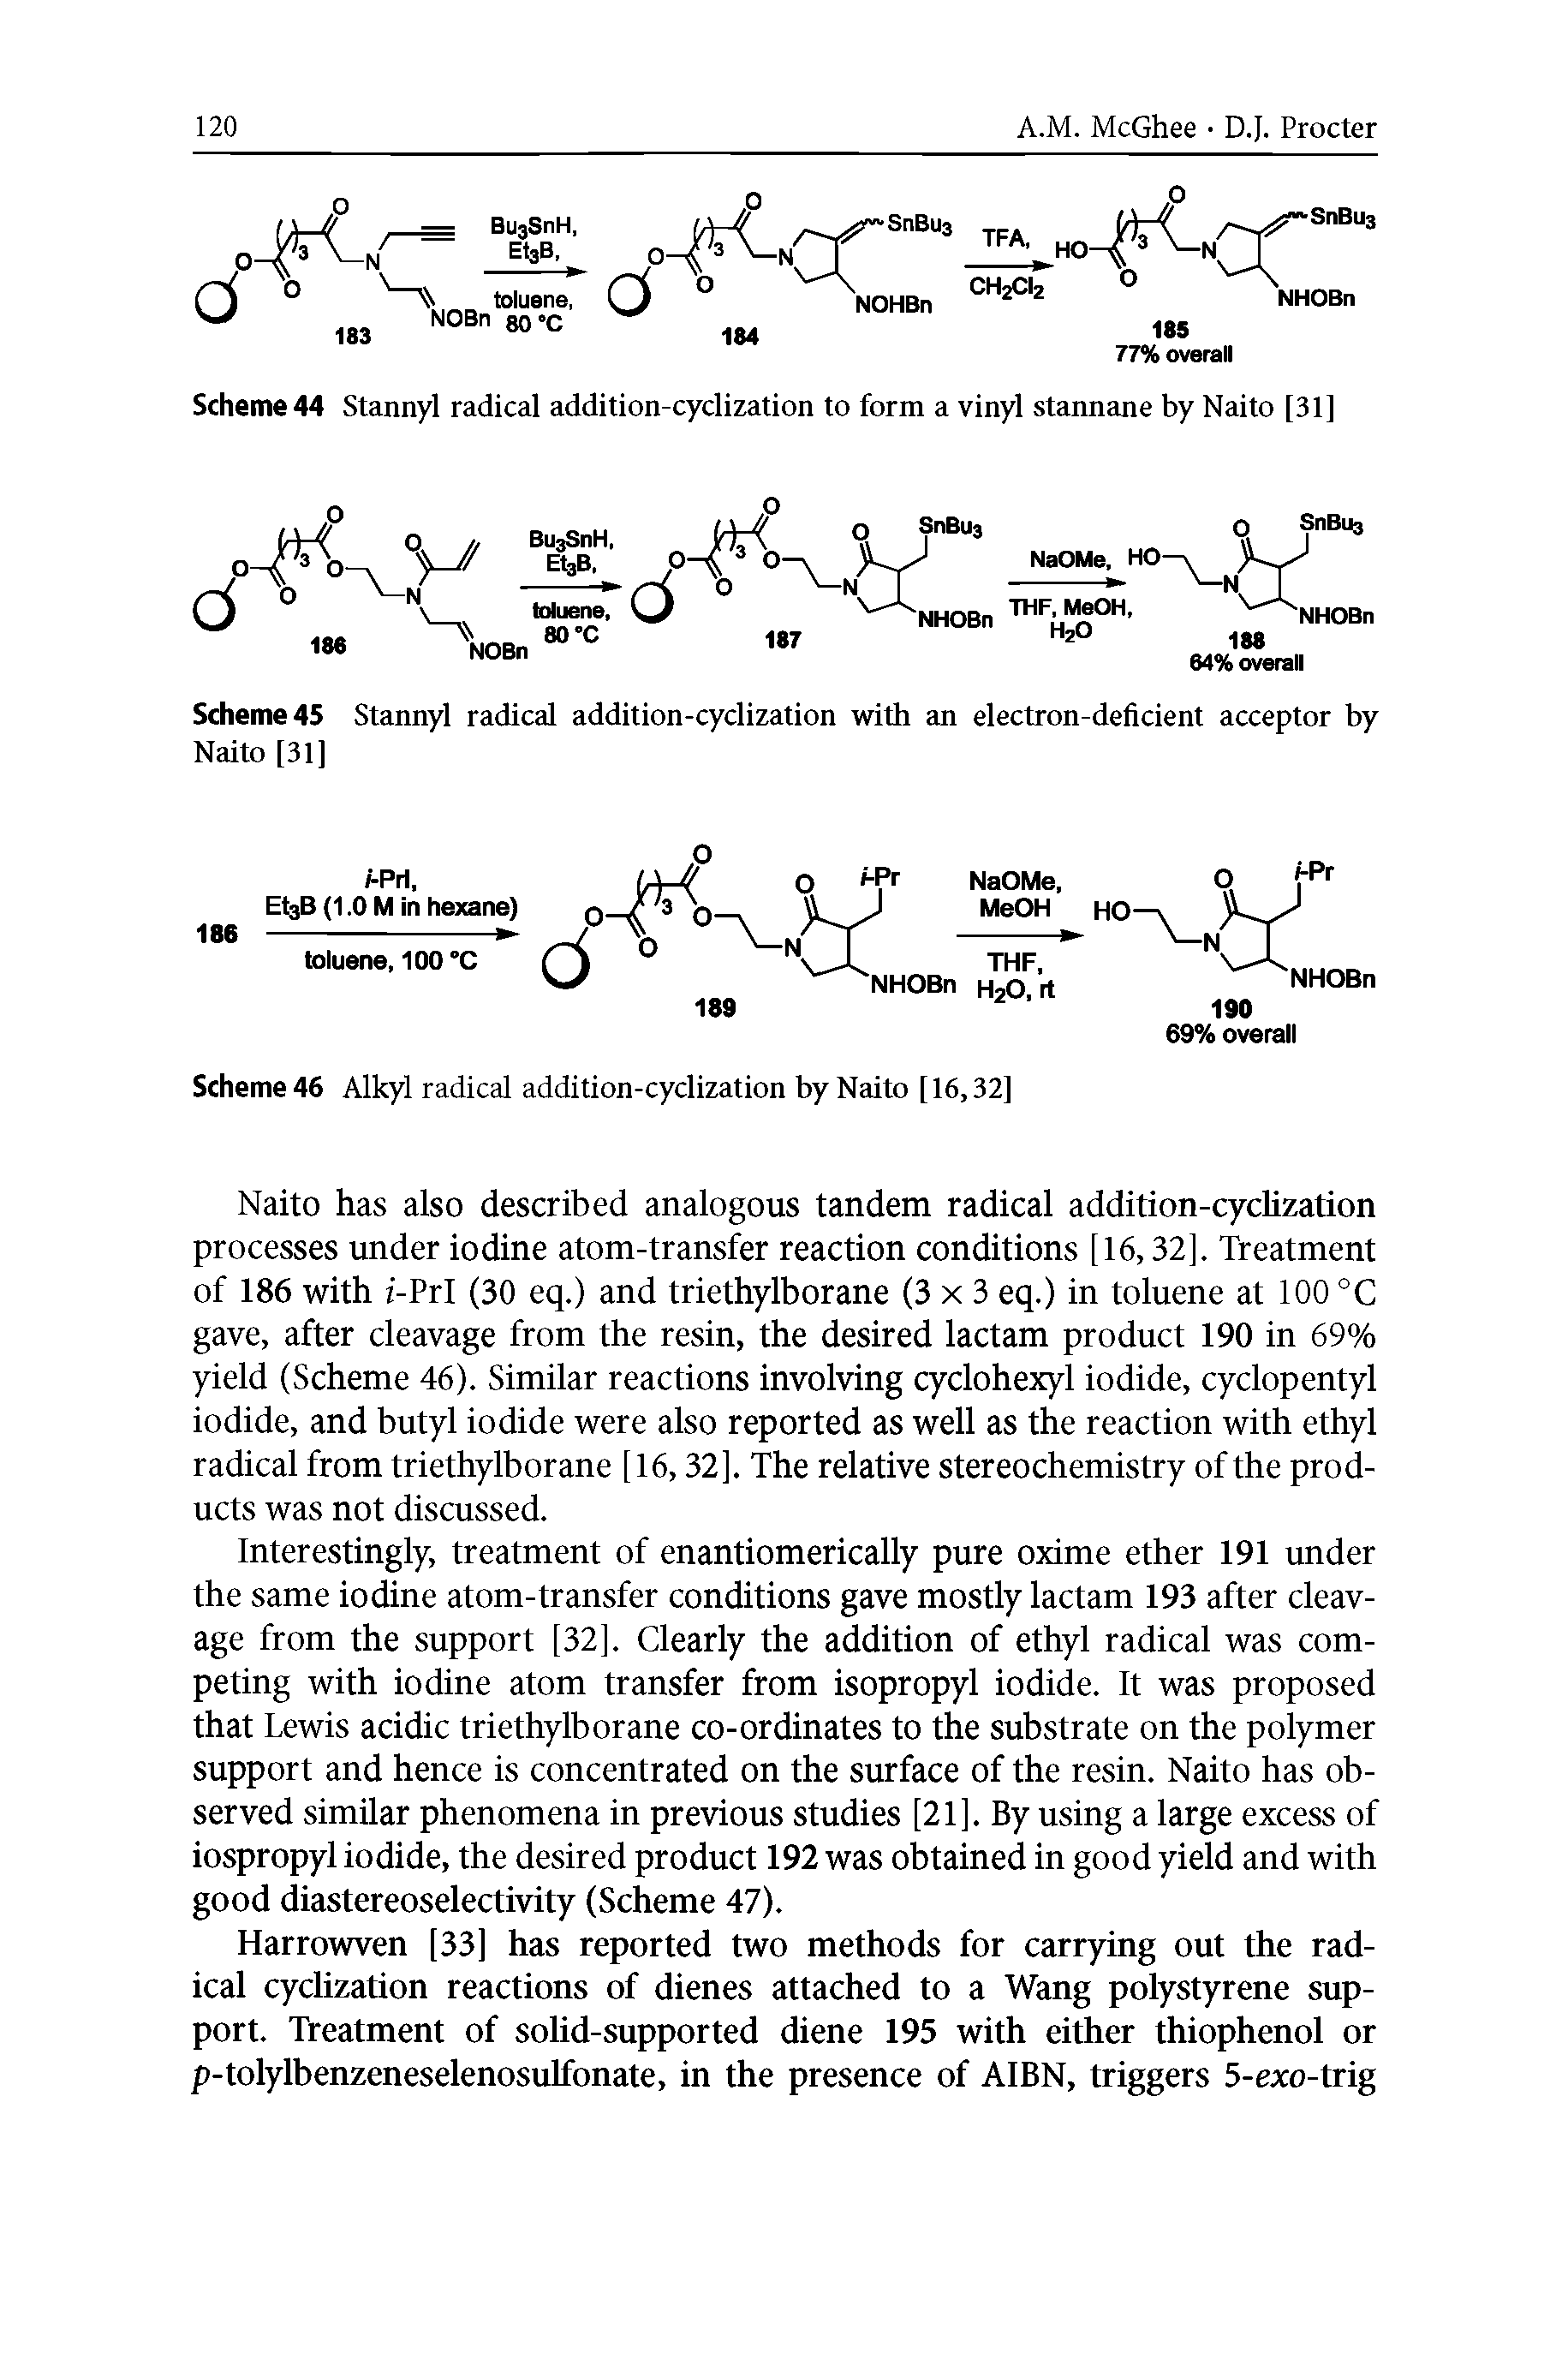 Scheme 46 Alkyl radical addition-cyclization by Naito [16,32]...